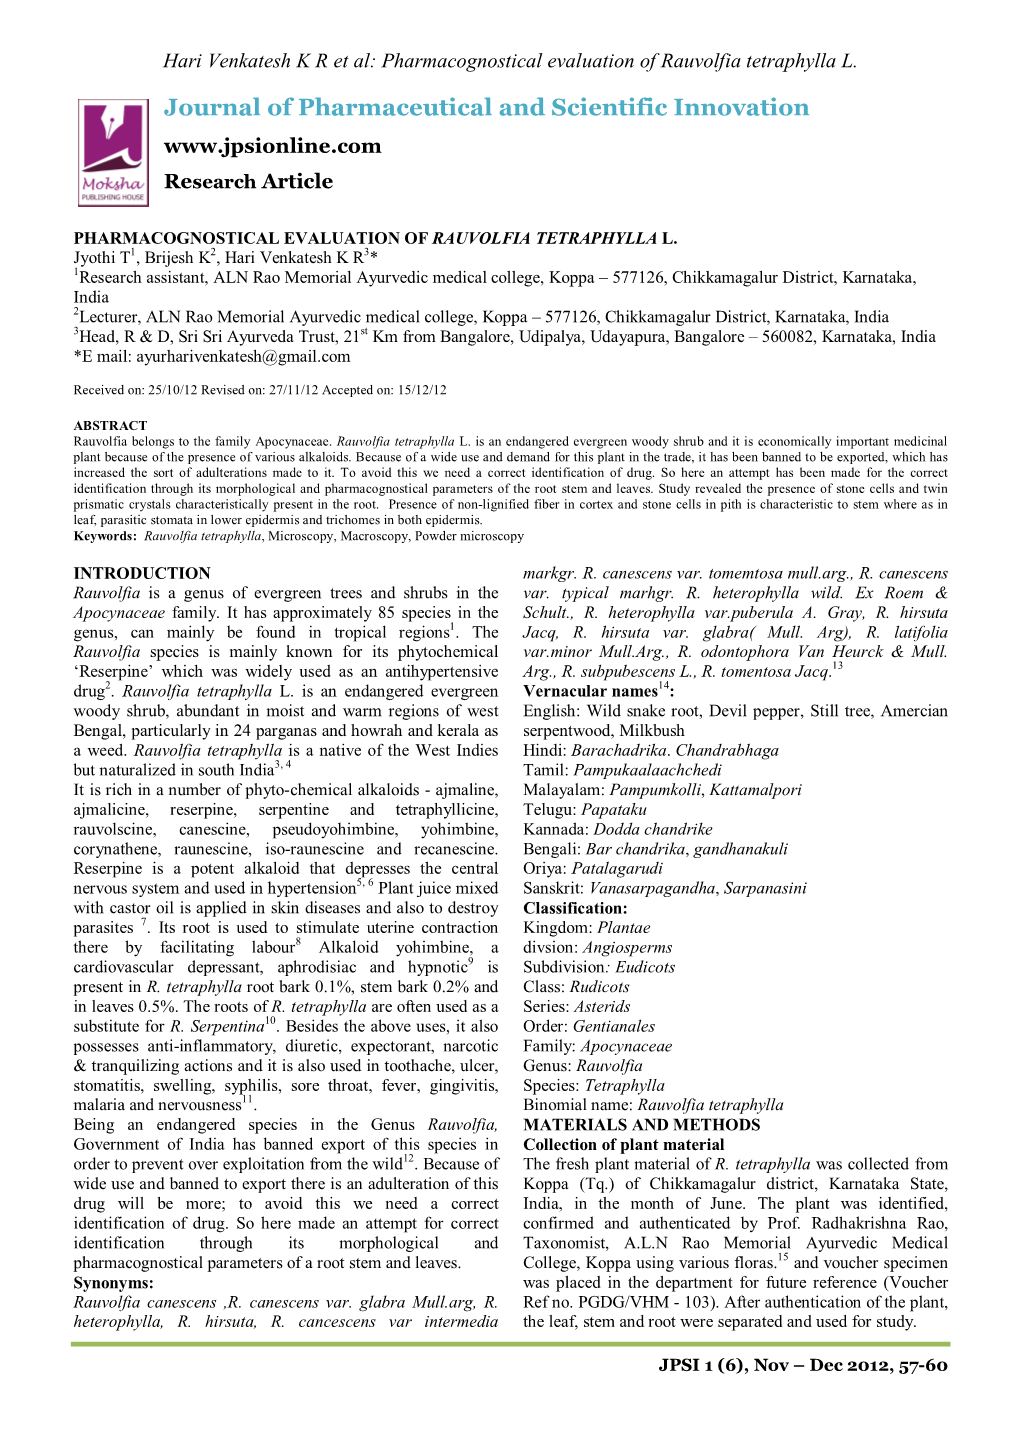 Pharmacognostical Evaluation of Rauvolfia Tetraphylla L